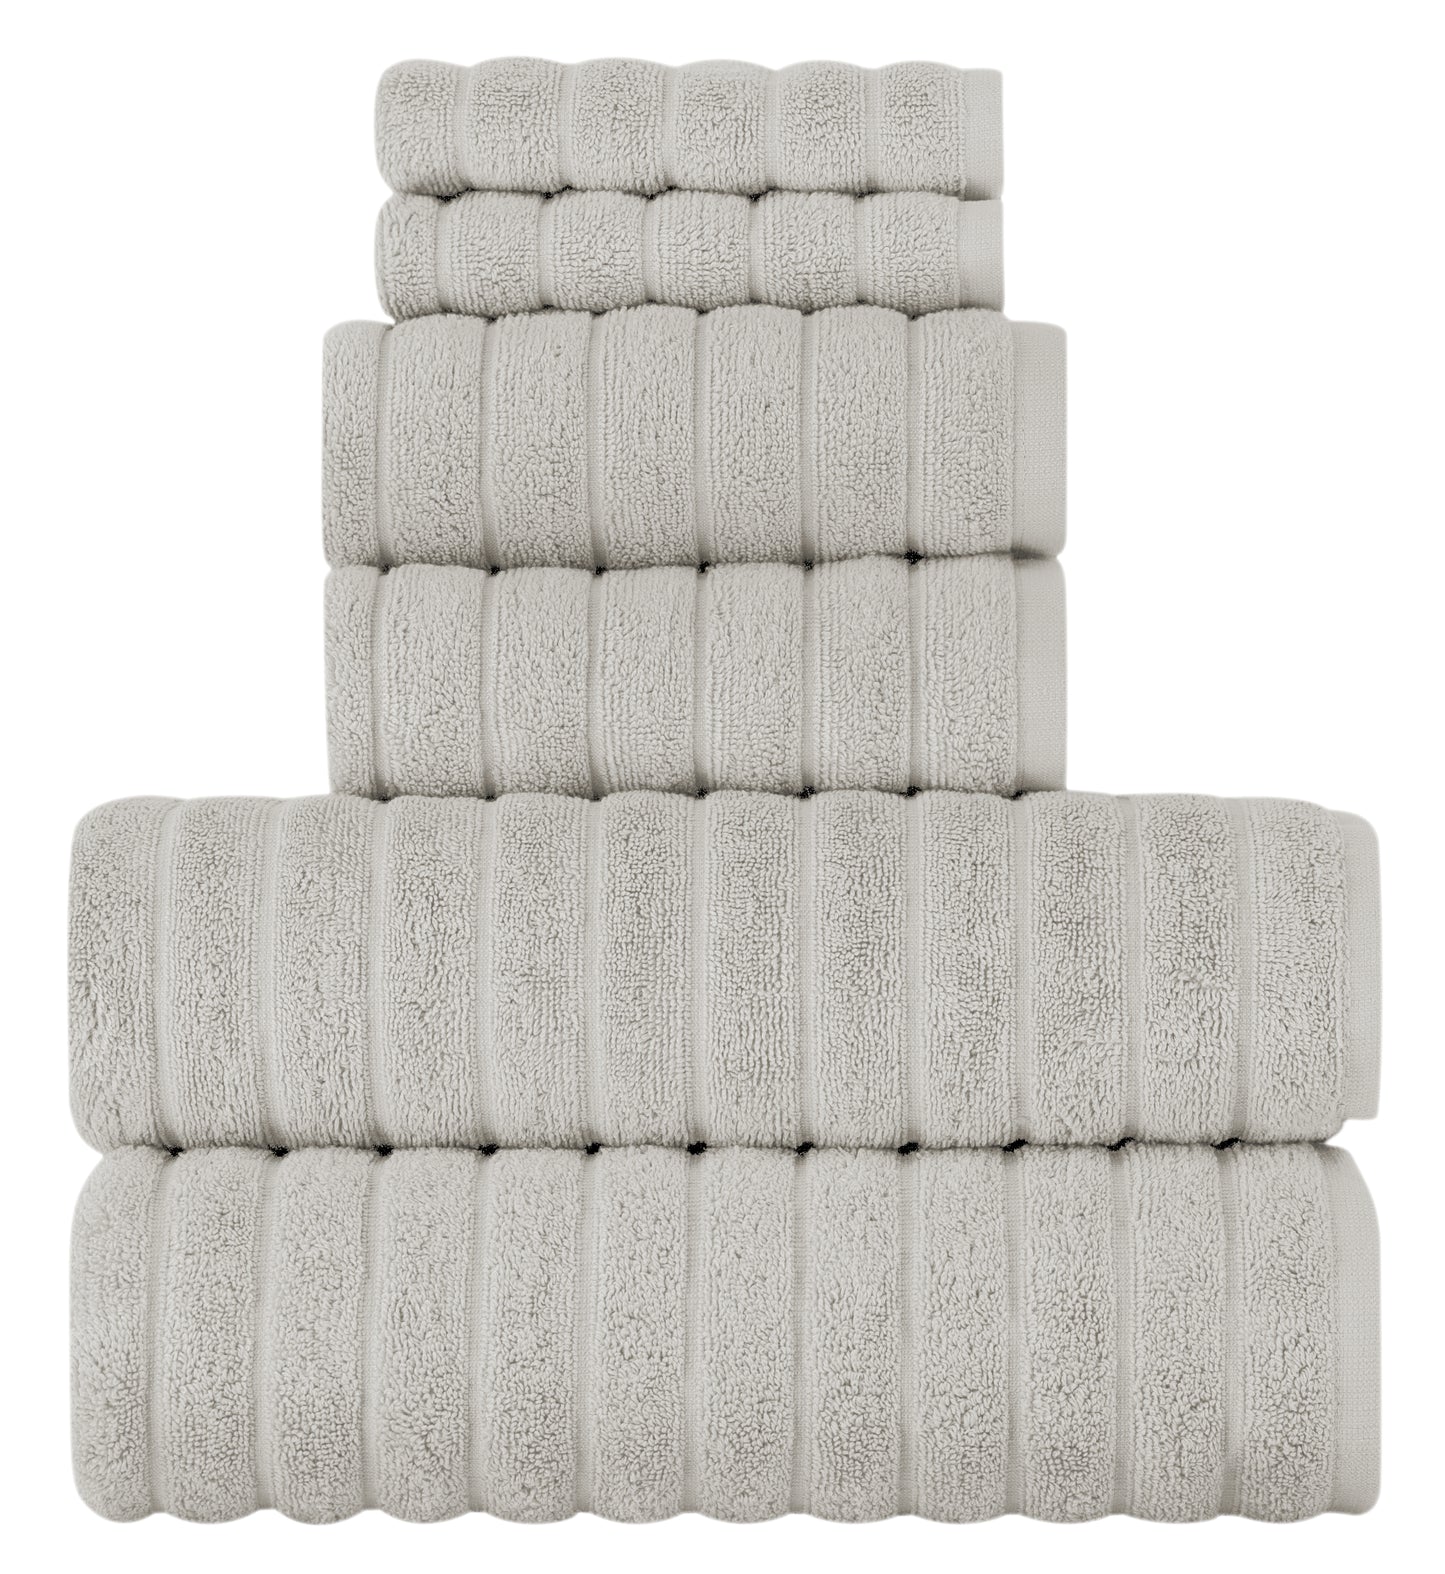 Shimmer Brampton Luxury Turkish Cotton Towel Set of 6 - Classic Turkish Towels